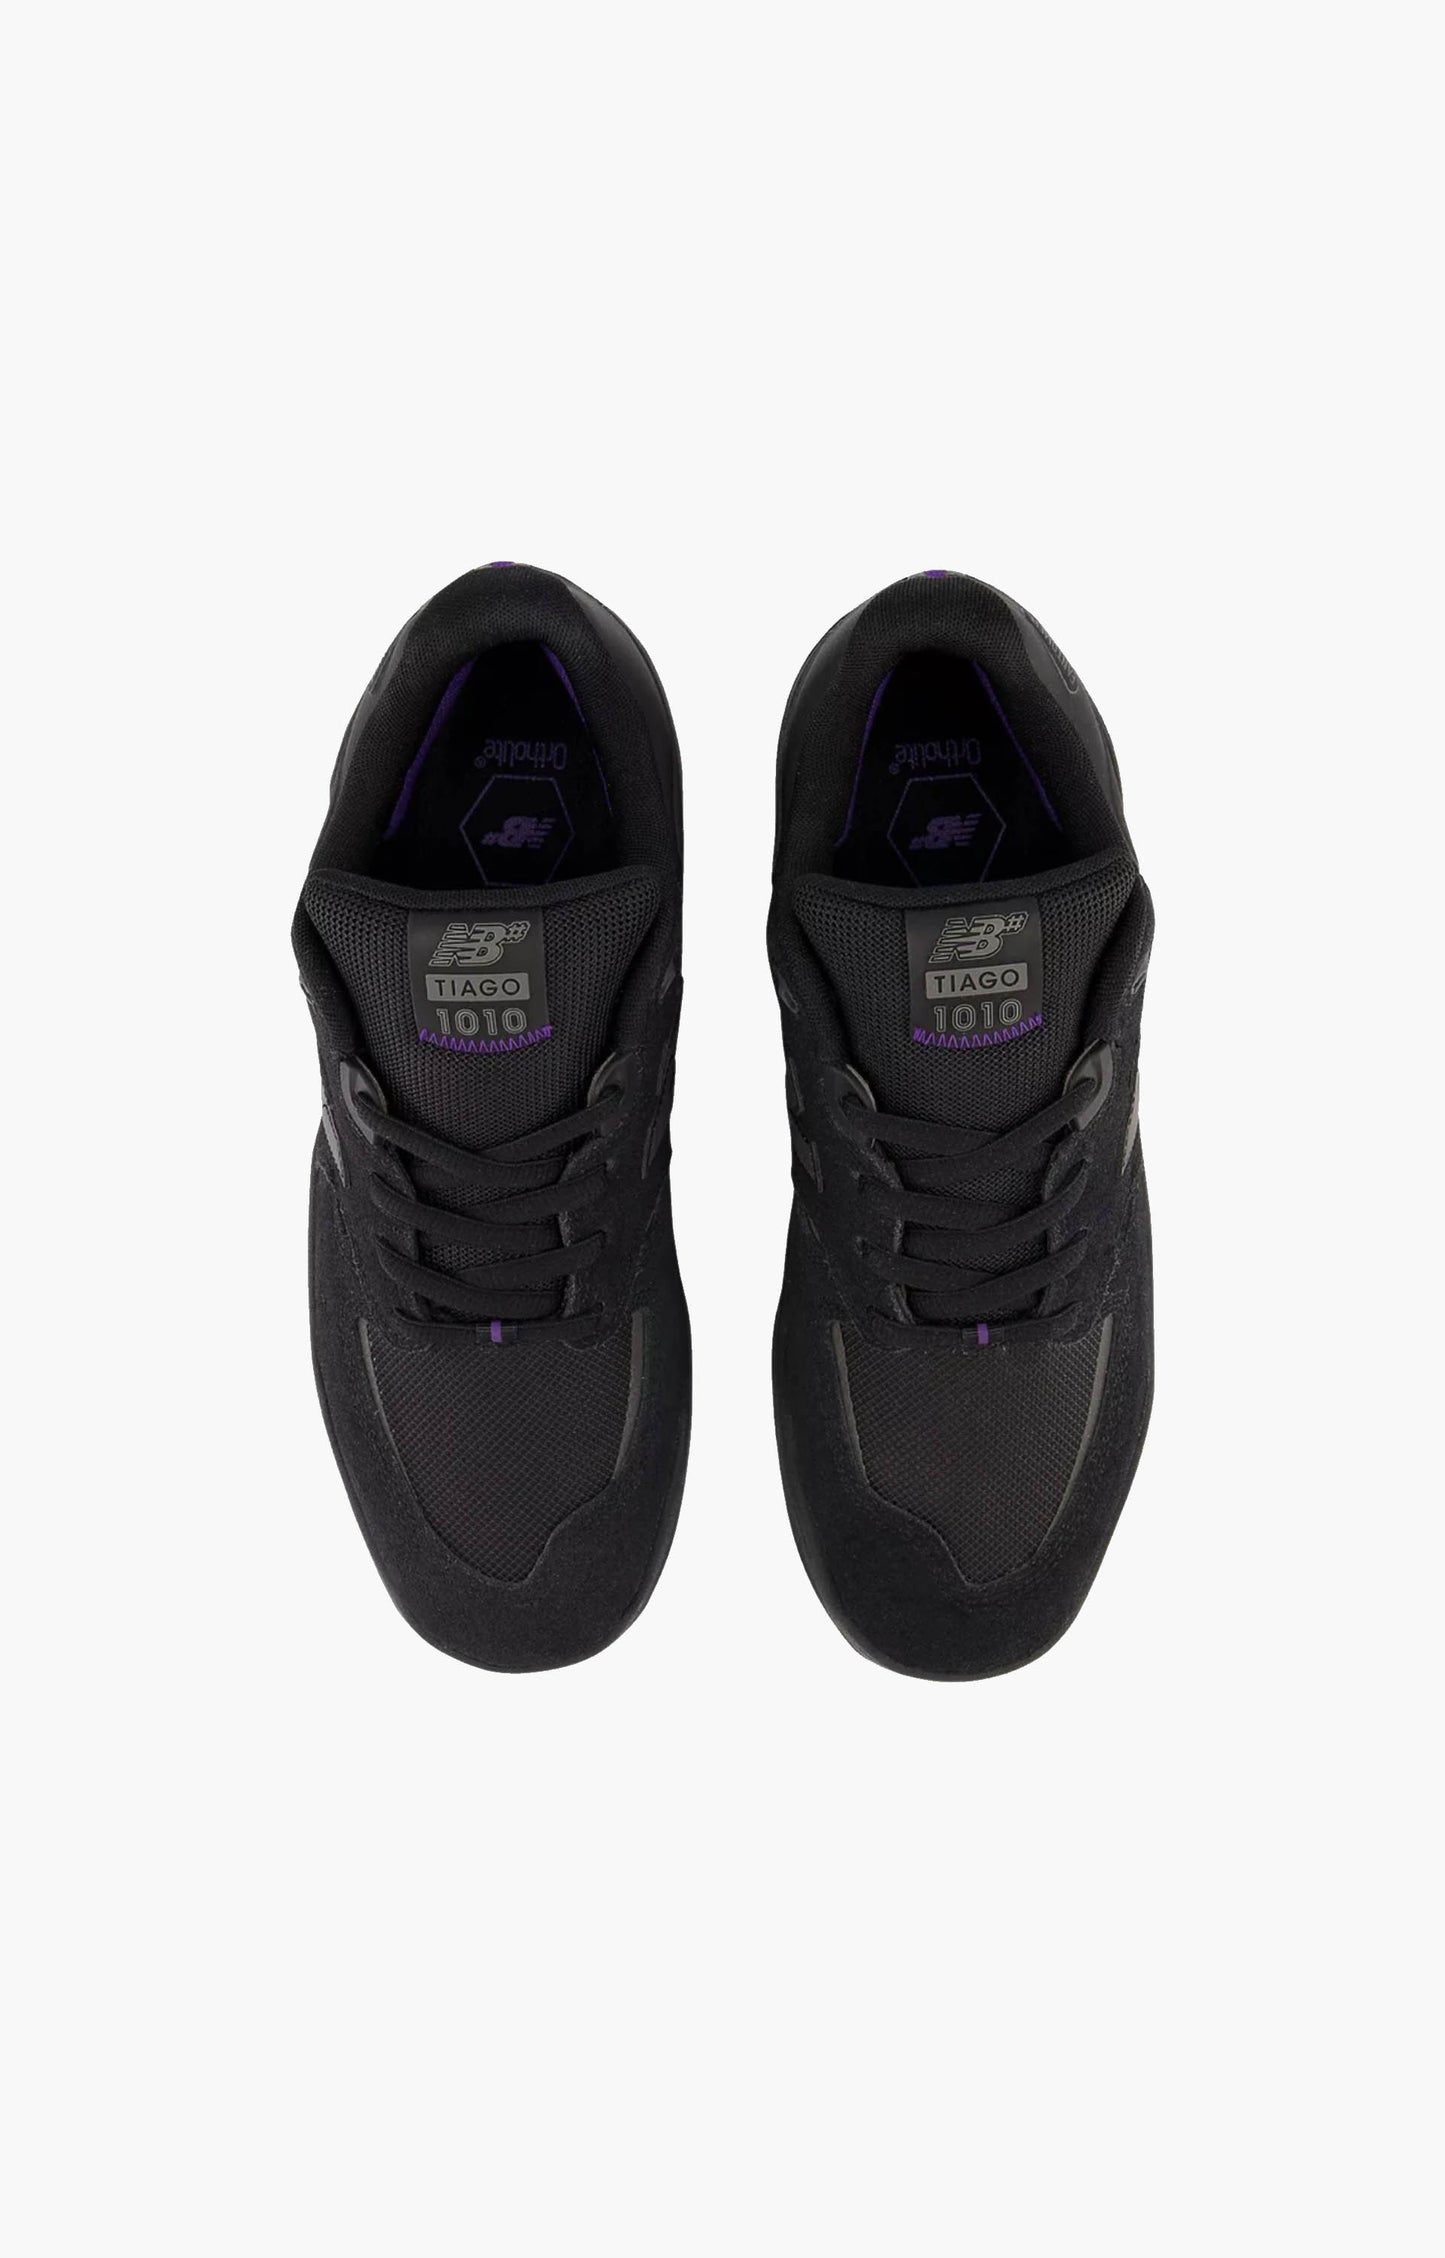 New Balance Numeric NM1010AB Shoe, Black